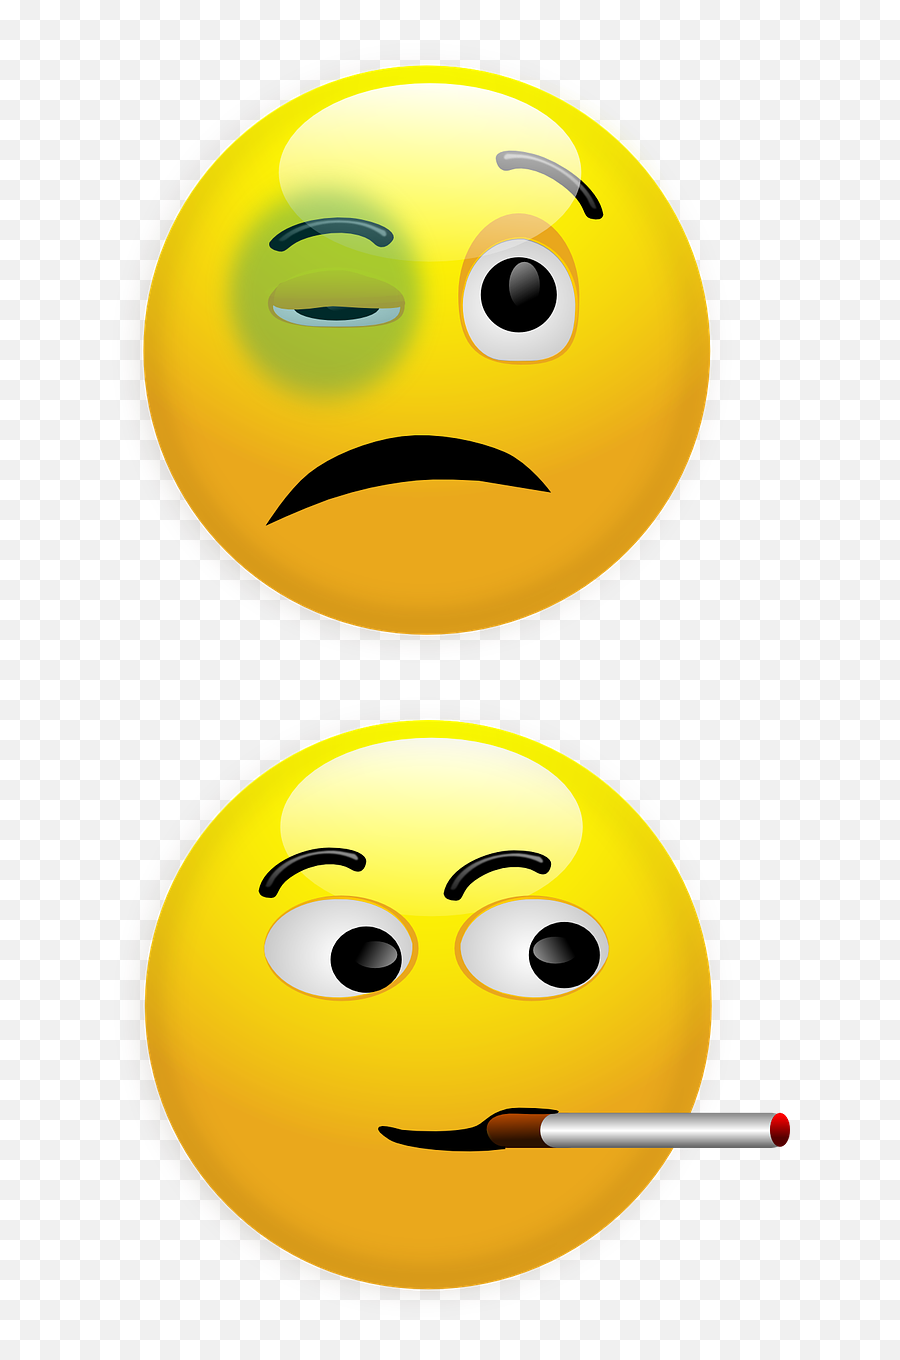 Openclipart - Emoticon Merokok Hitam Putih Emoji,2 3 Emoticon